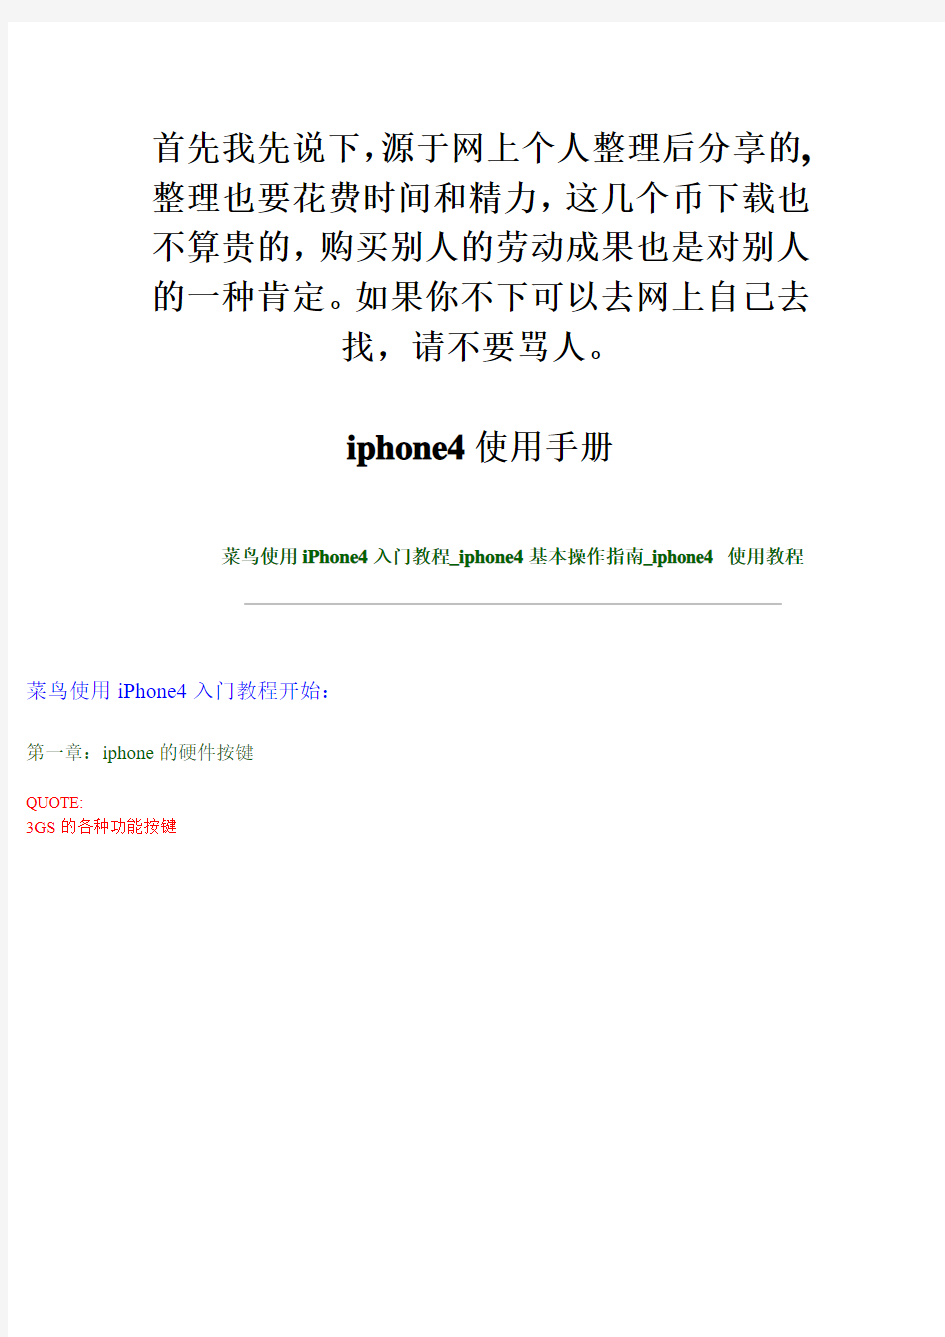 iphone4完全中文版使用手册